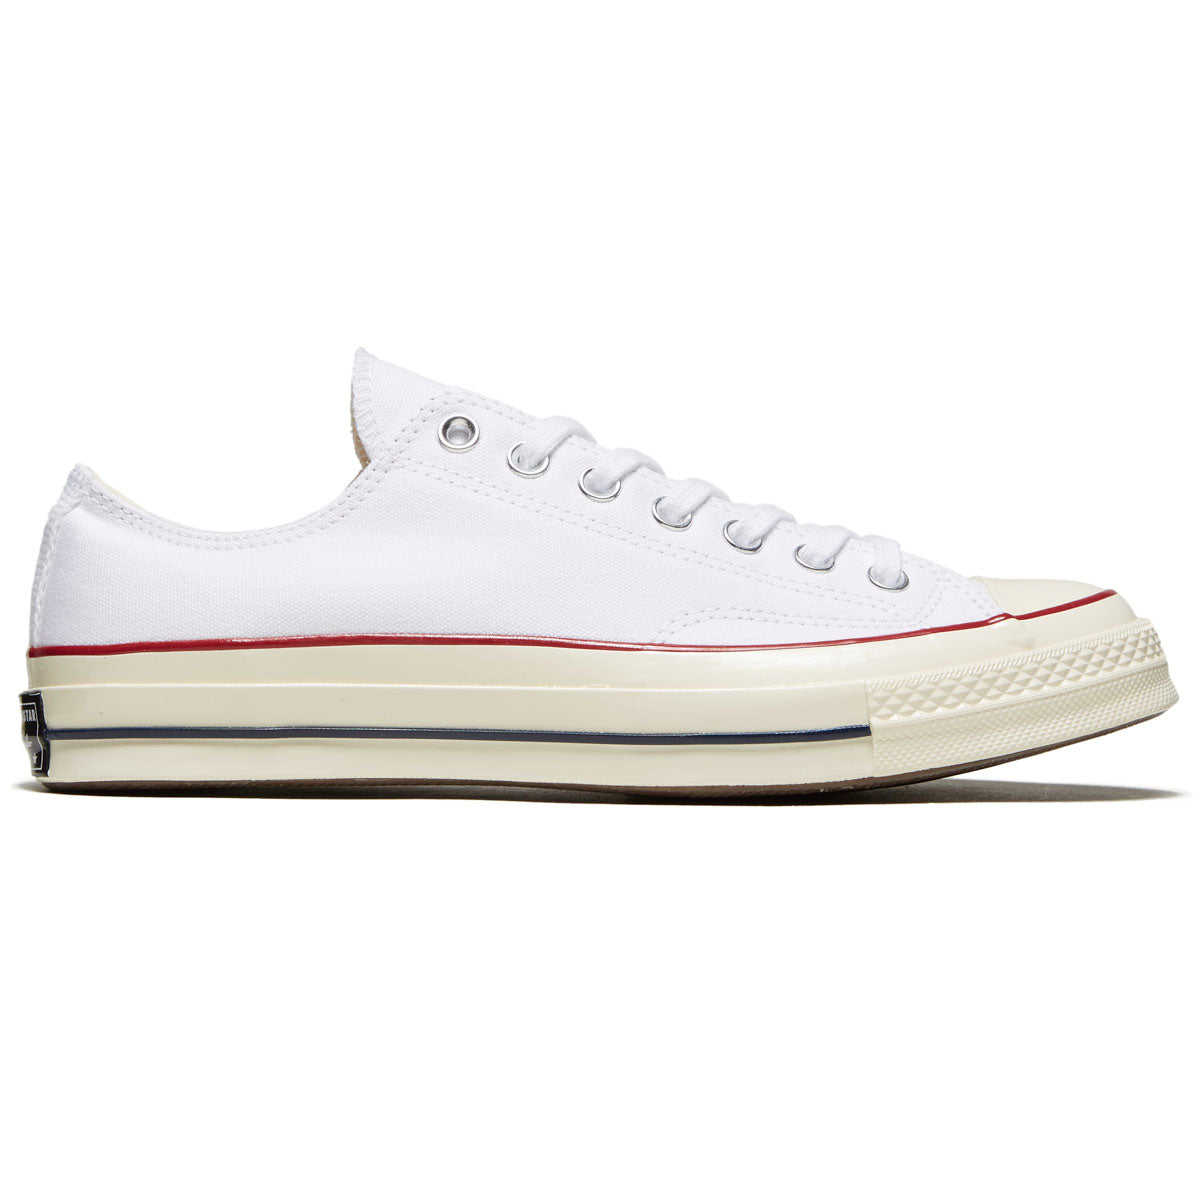 Converse Chuck 70 Ox Shoes - White/Garnet/Egret image 1